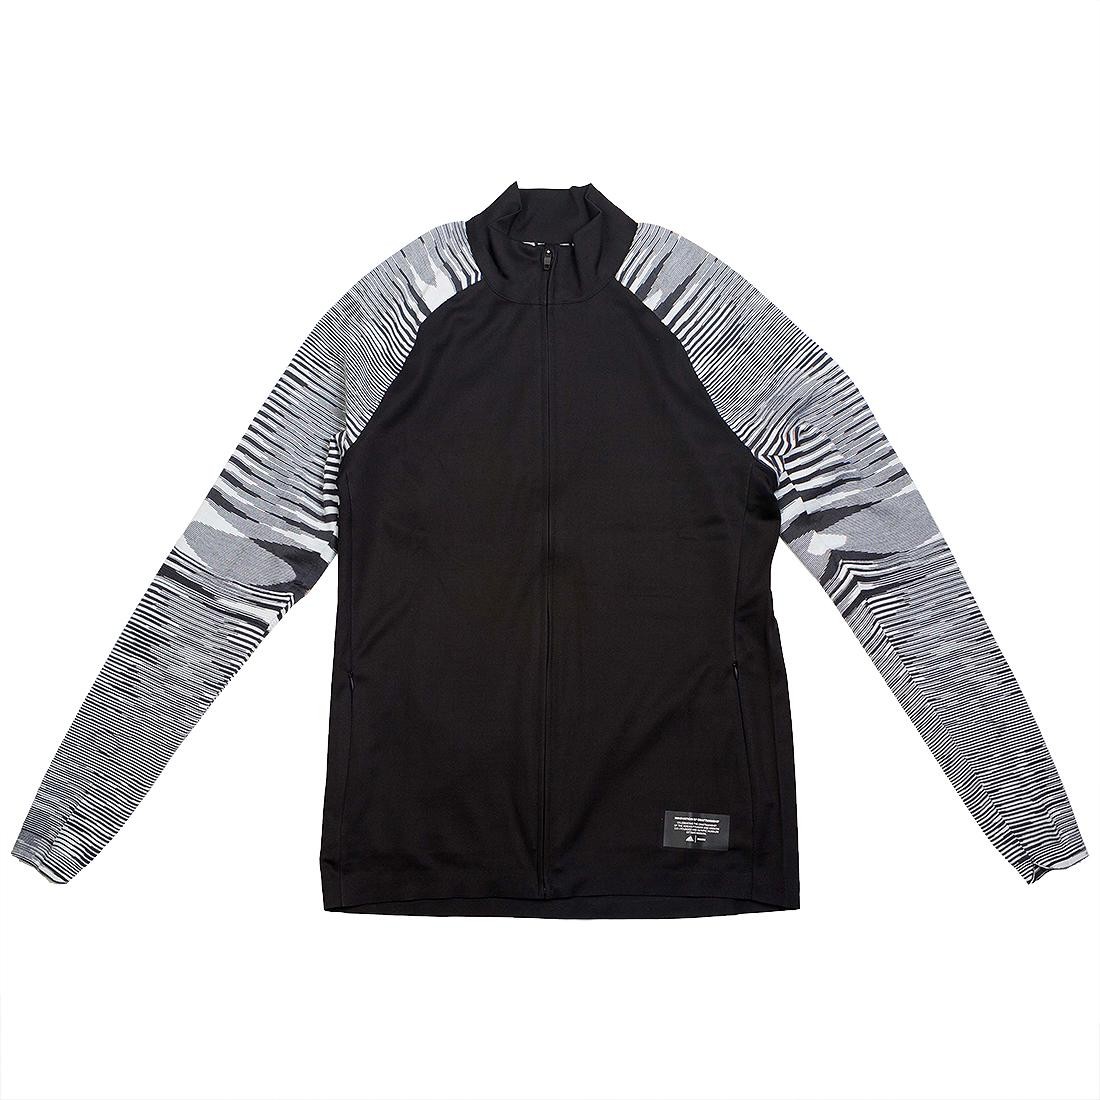 Adidas x Missoni Men PHX Jacket black dark grey white